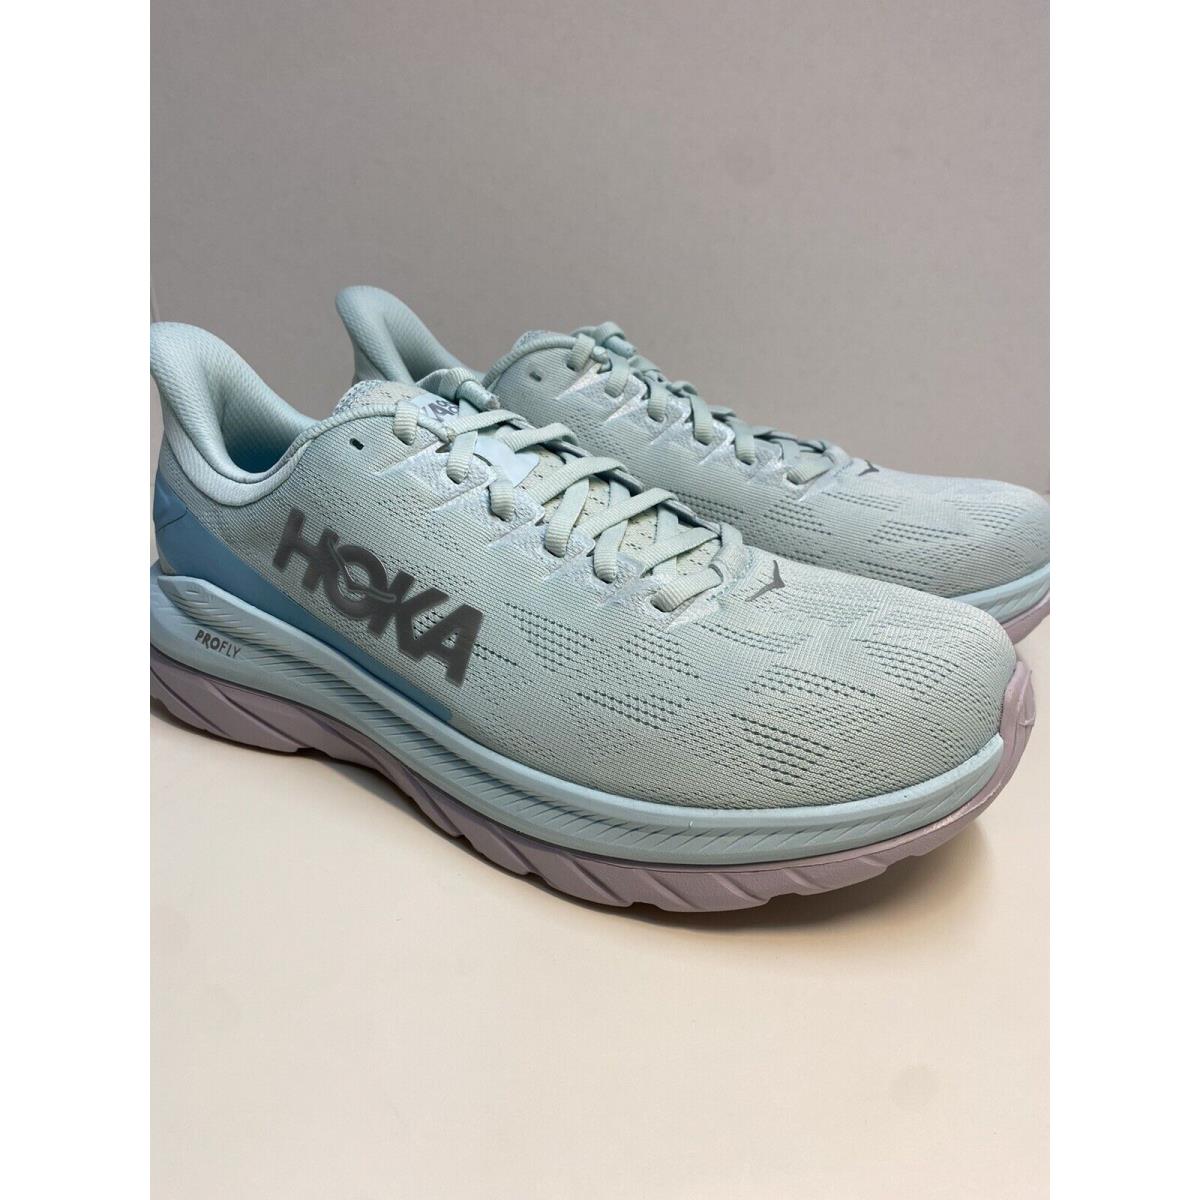 Hoka One One Mach 4 Bgcs Womens Running Shoes Size 10.5 B Medium